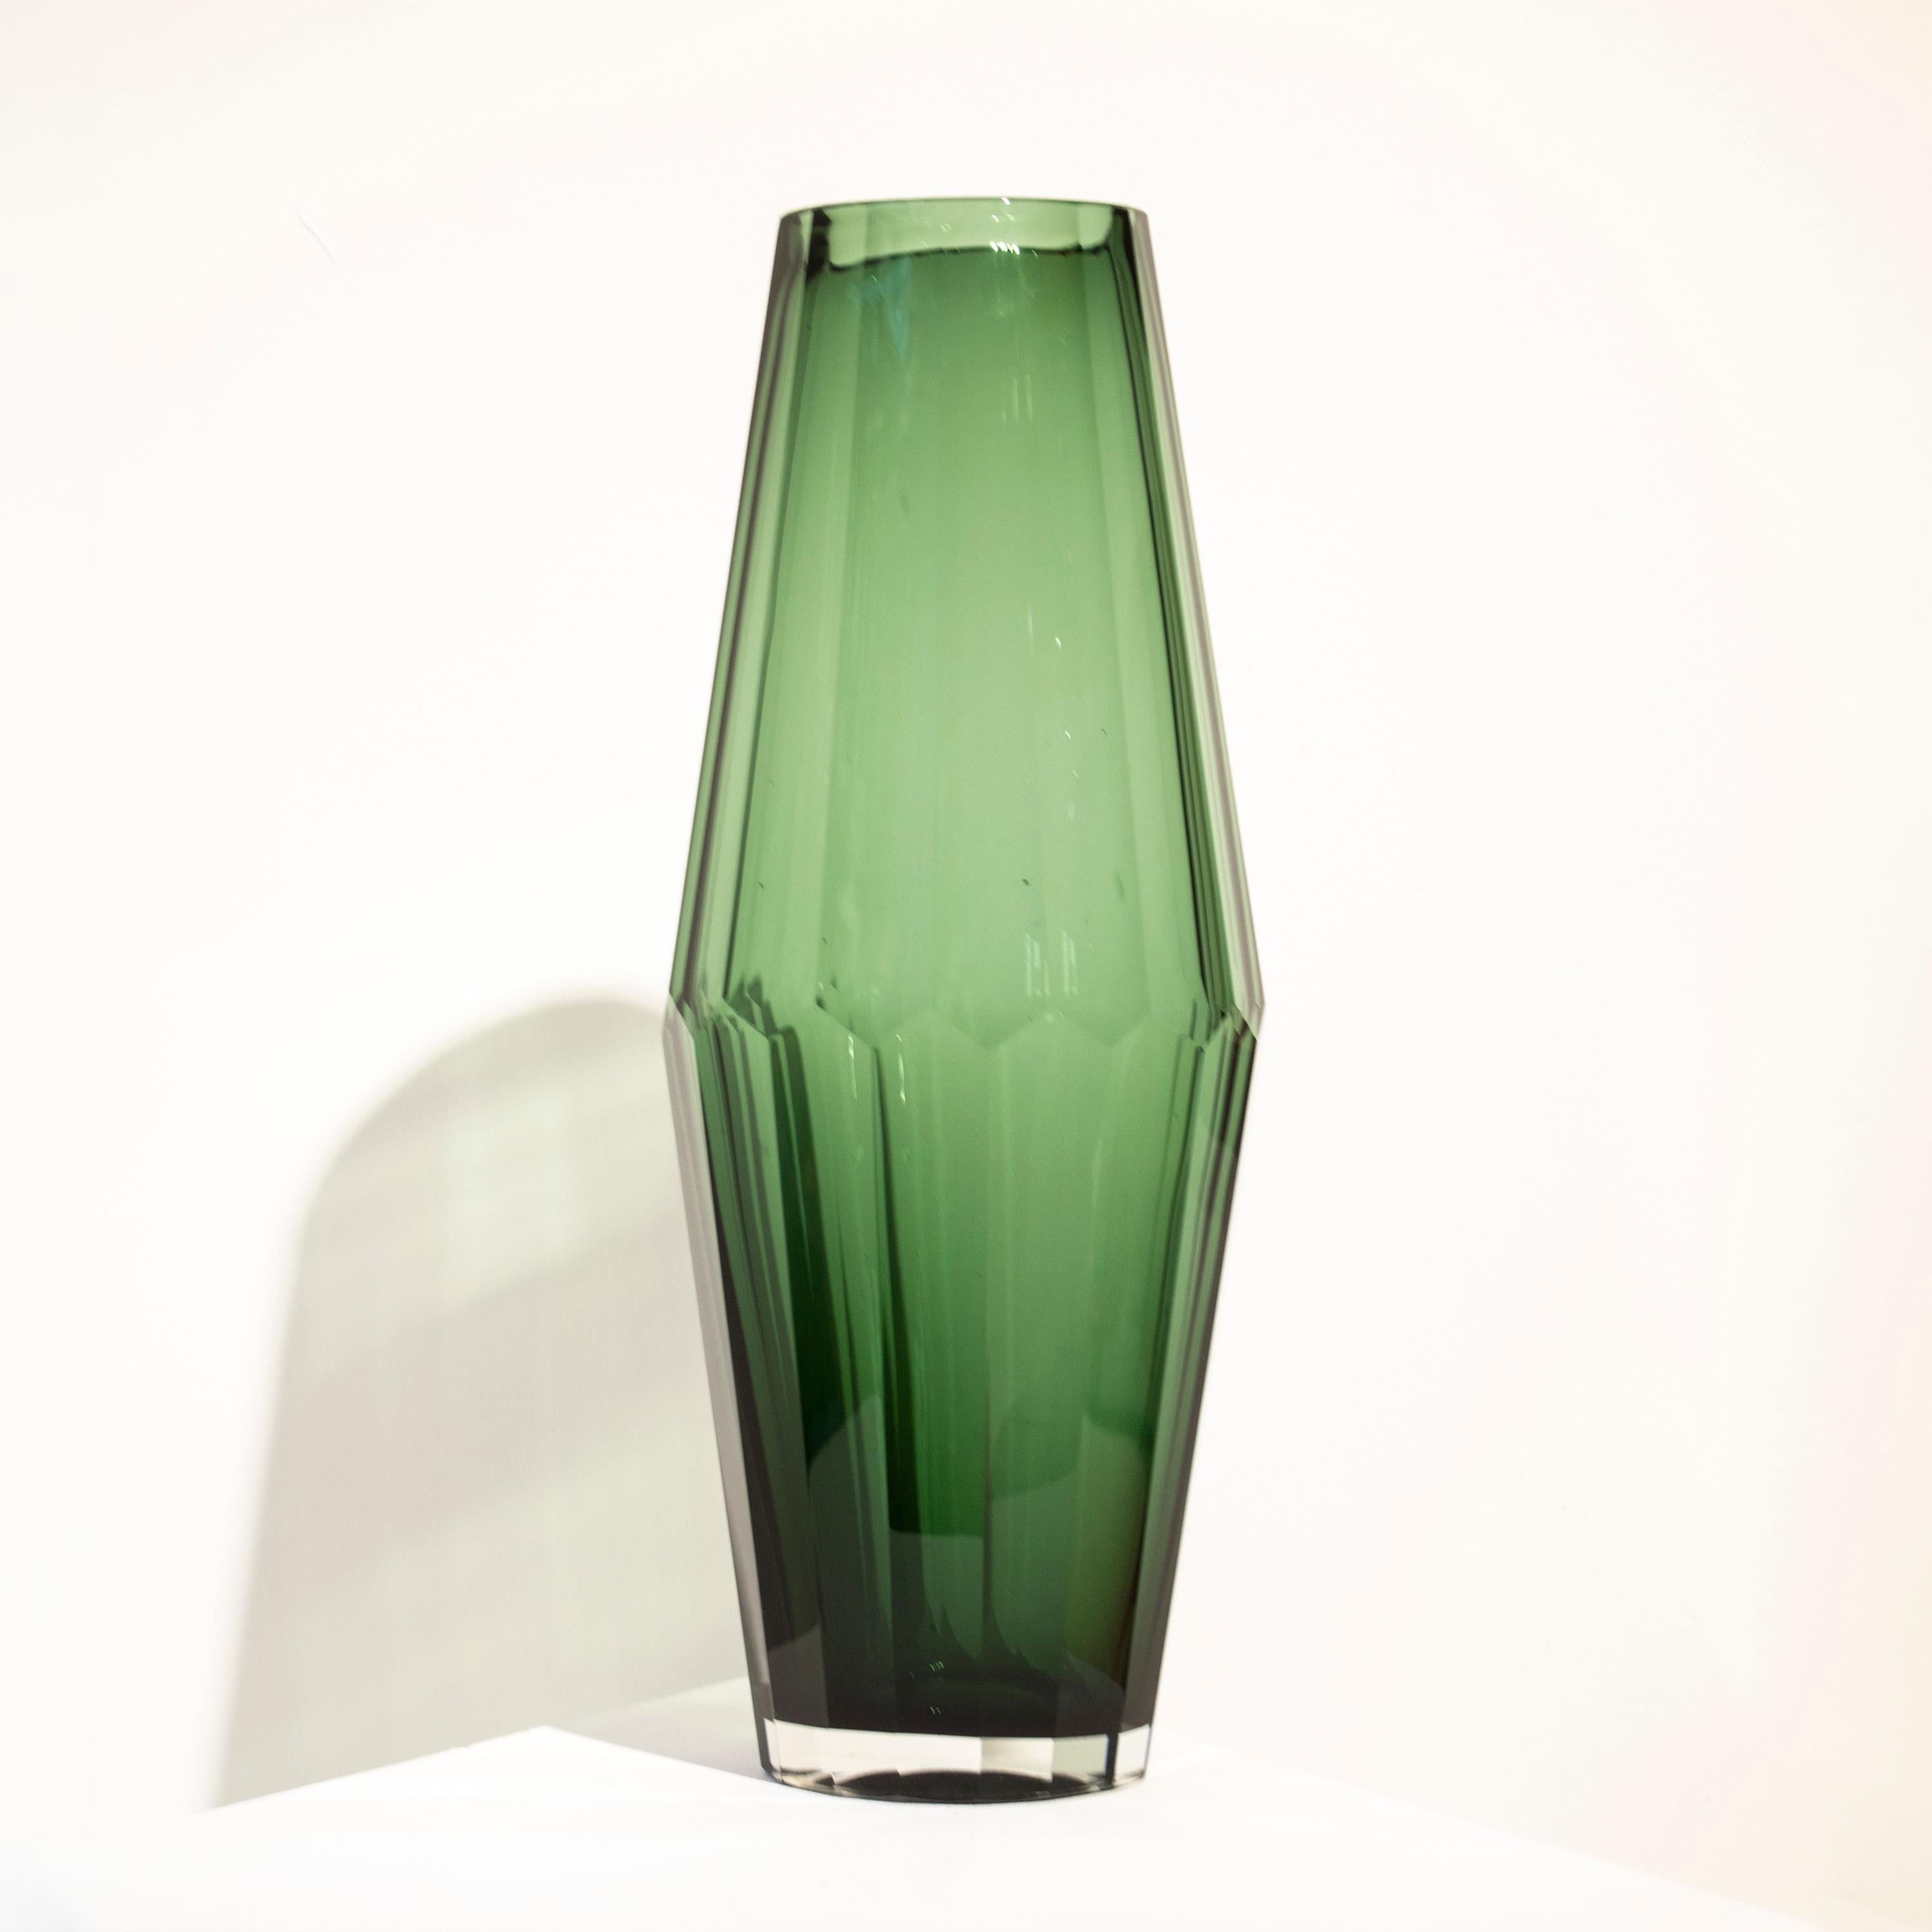 Vase aus mundgeblasenem italienischem, grünem, halbtransparentem Glas mit facettierter Form.